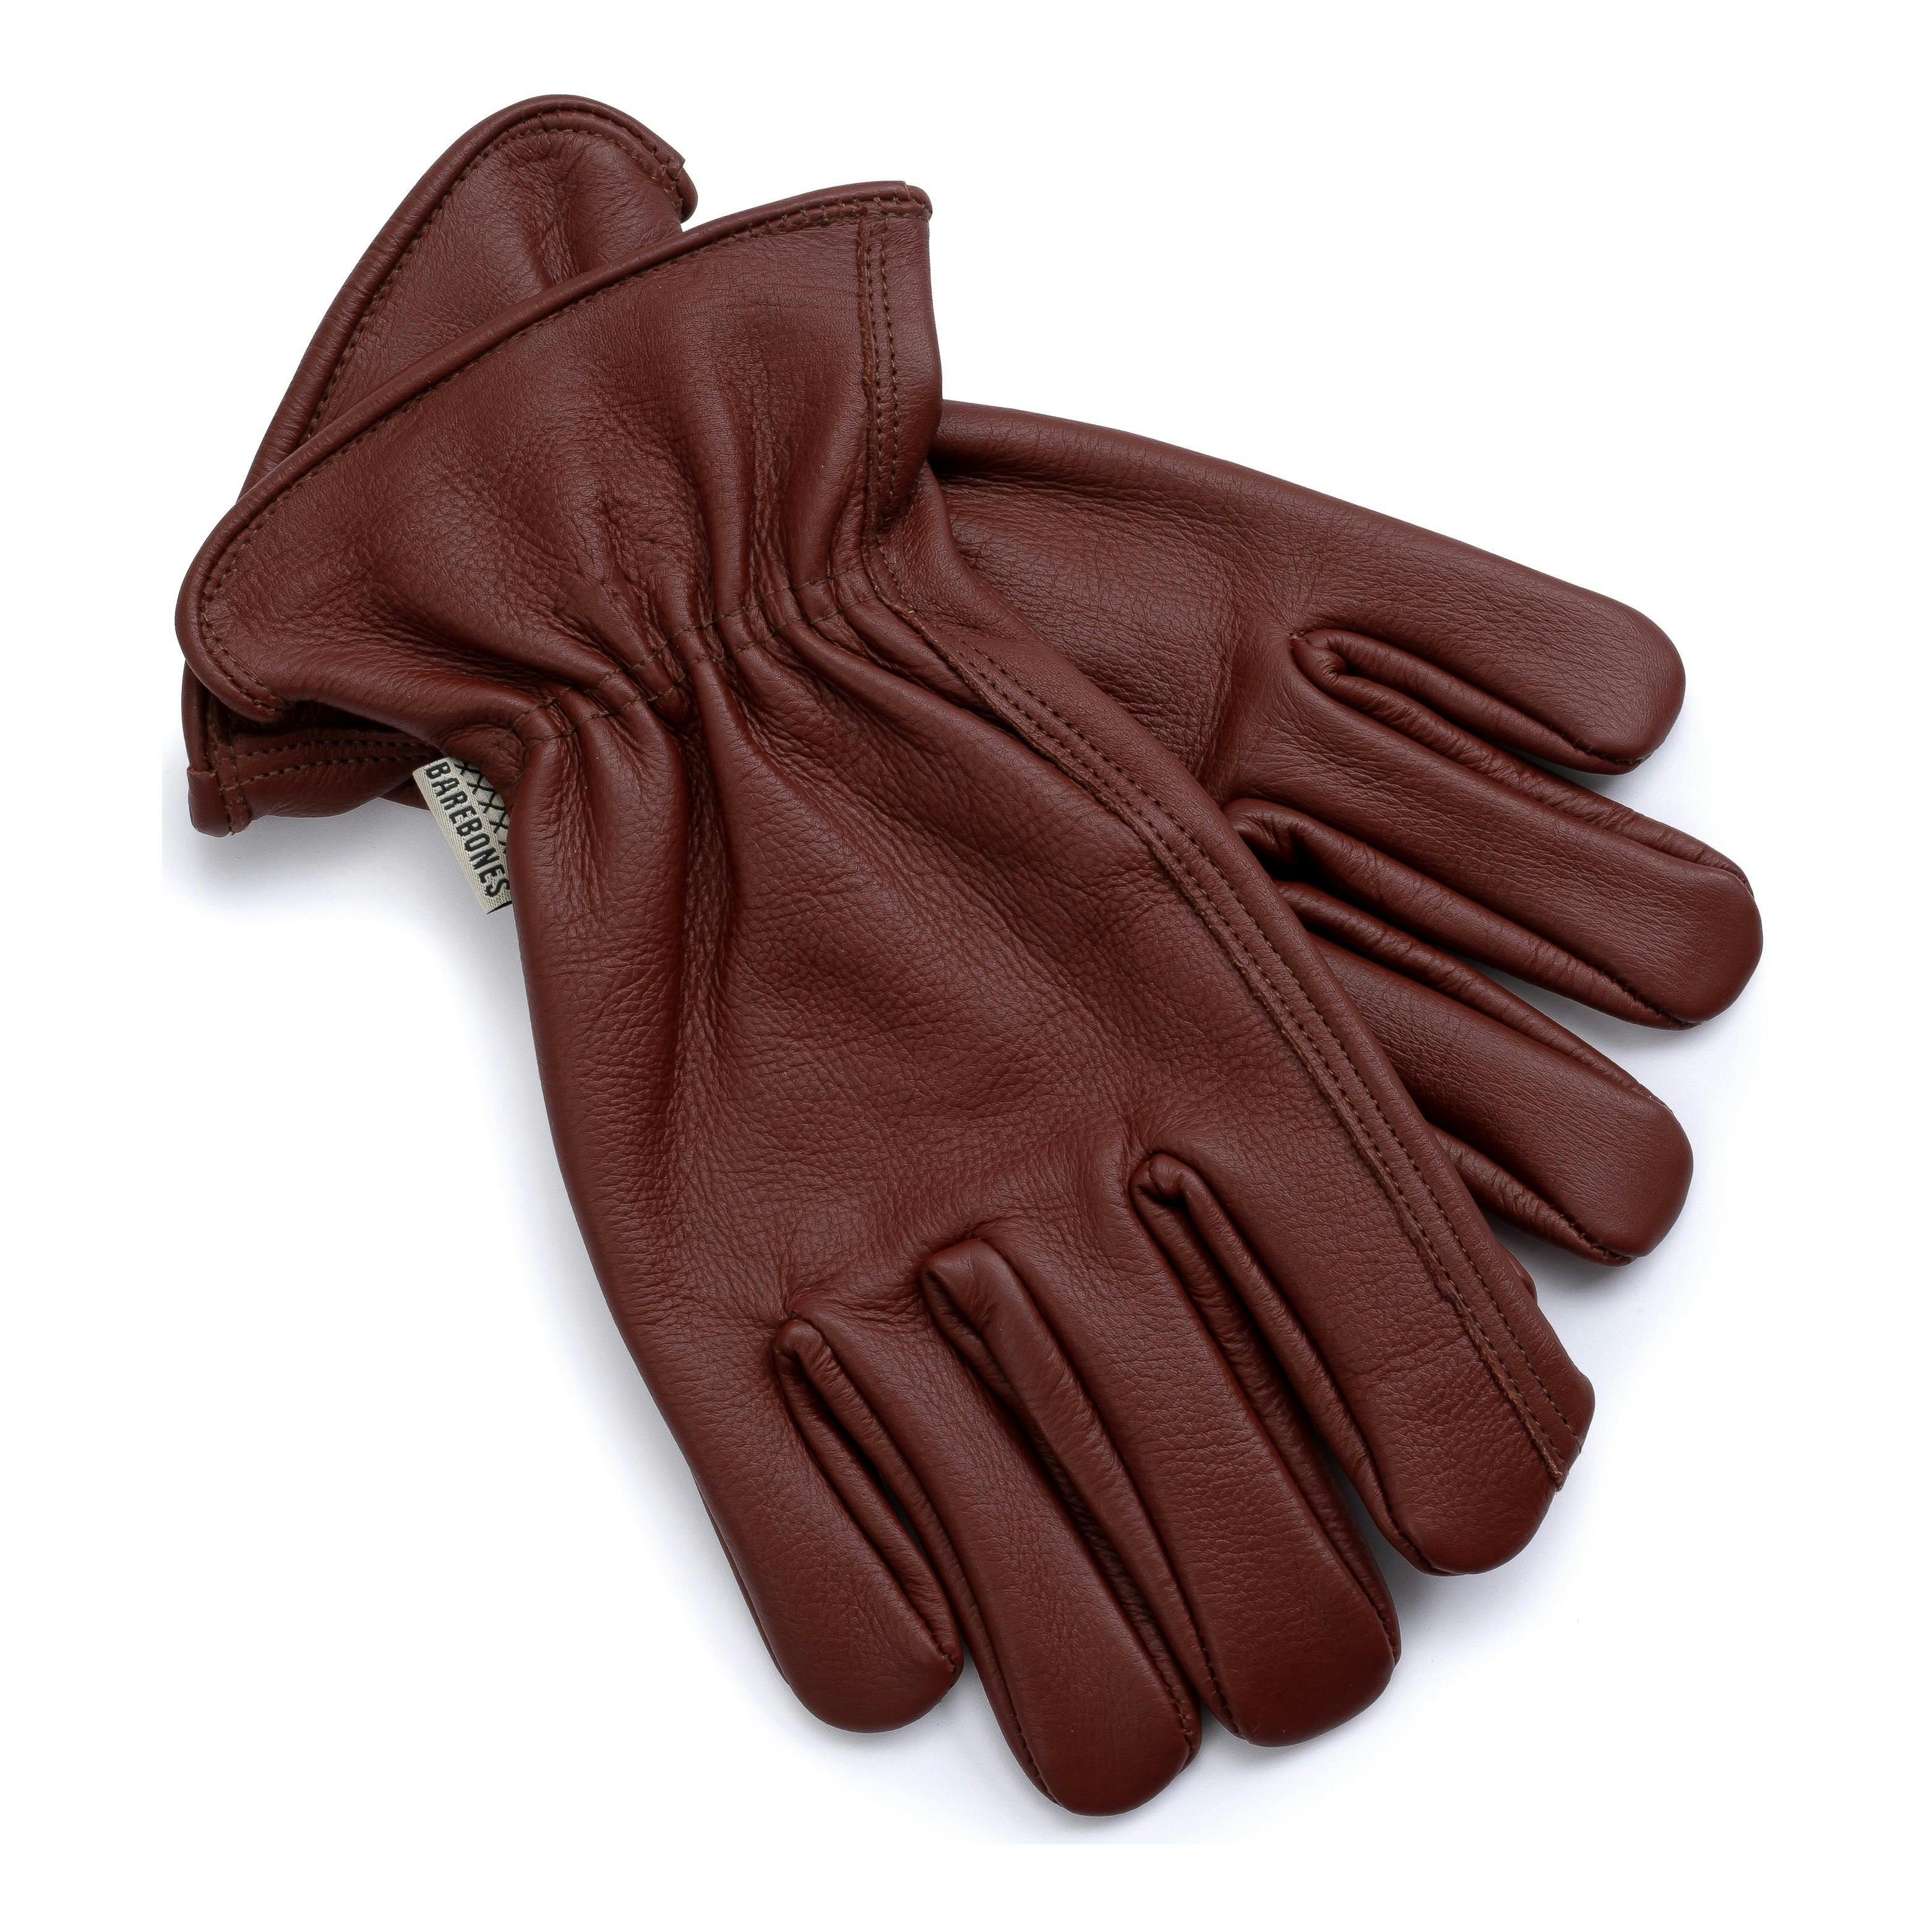 Barebones Classic Work Glove